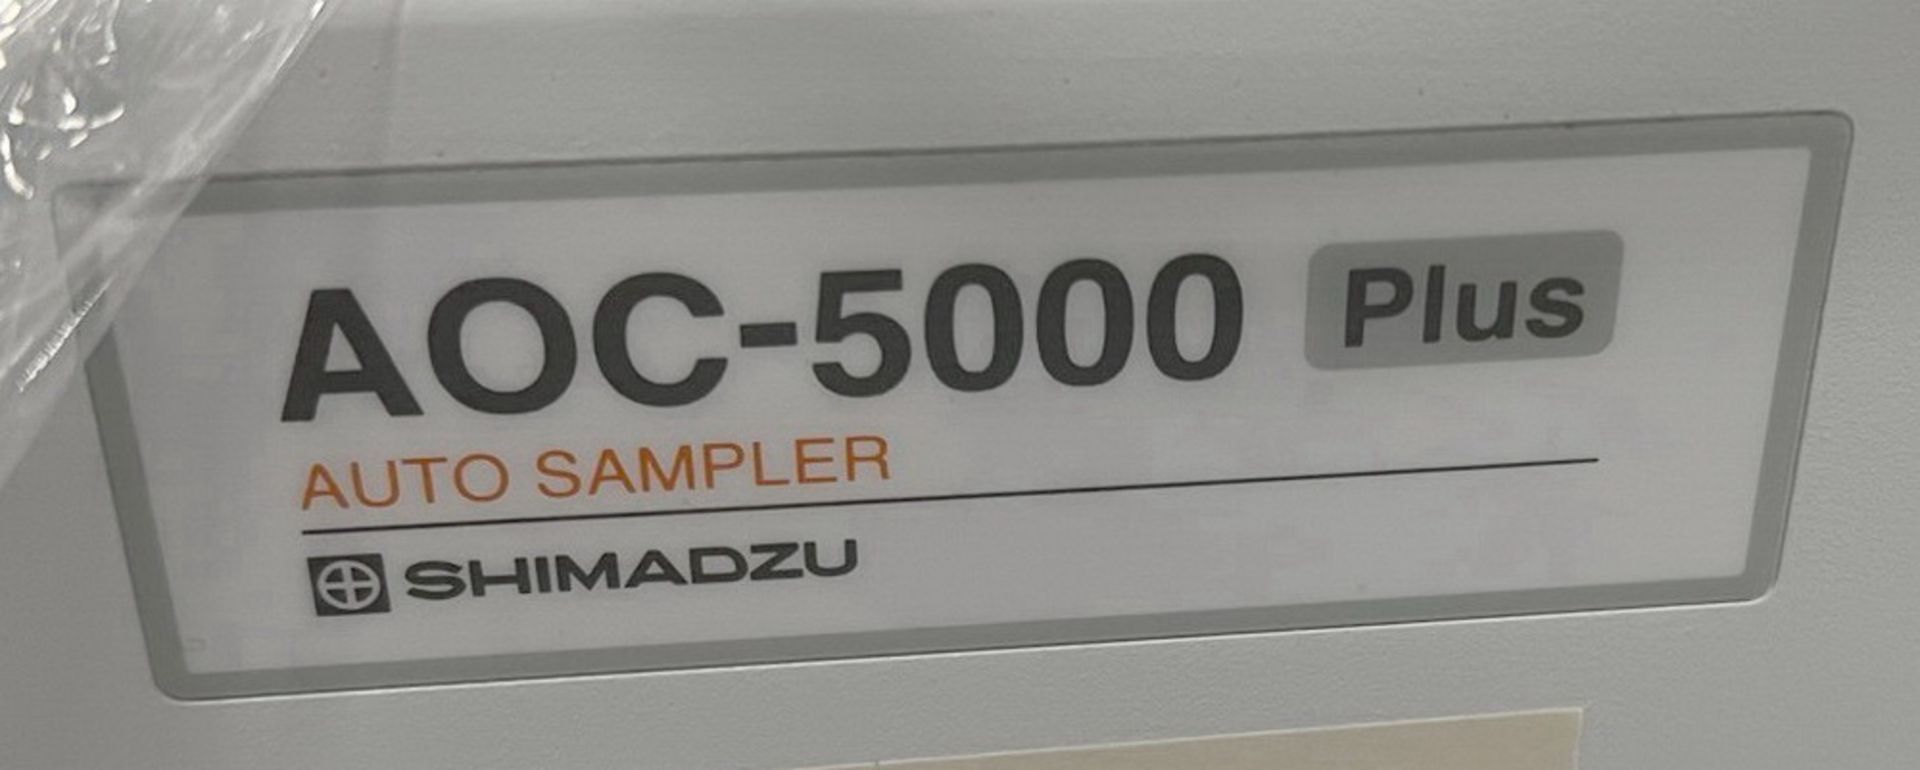 Shimadzu GC-2010 Plus Gas Chromatograph (GC) - Image 2 of 4